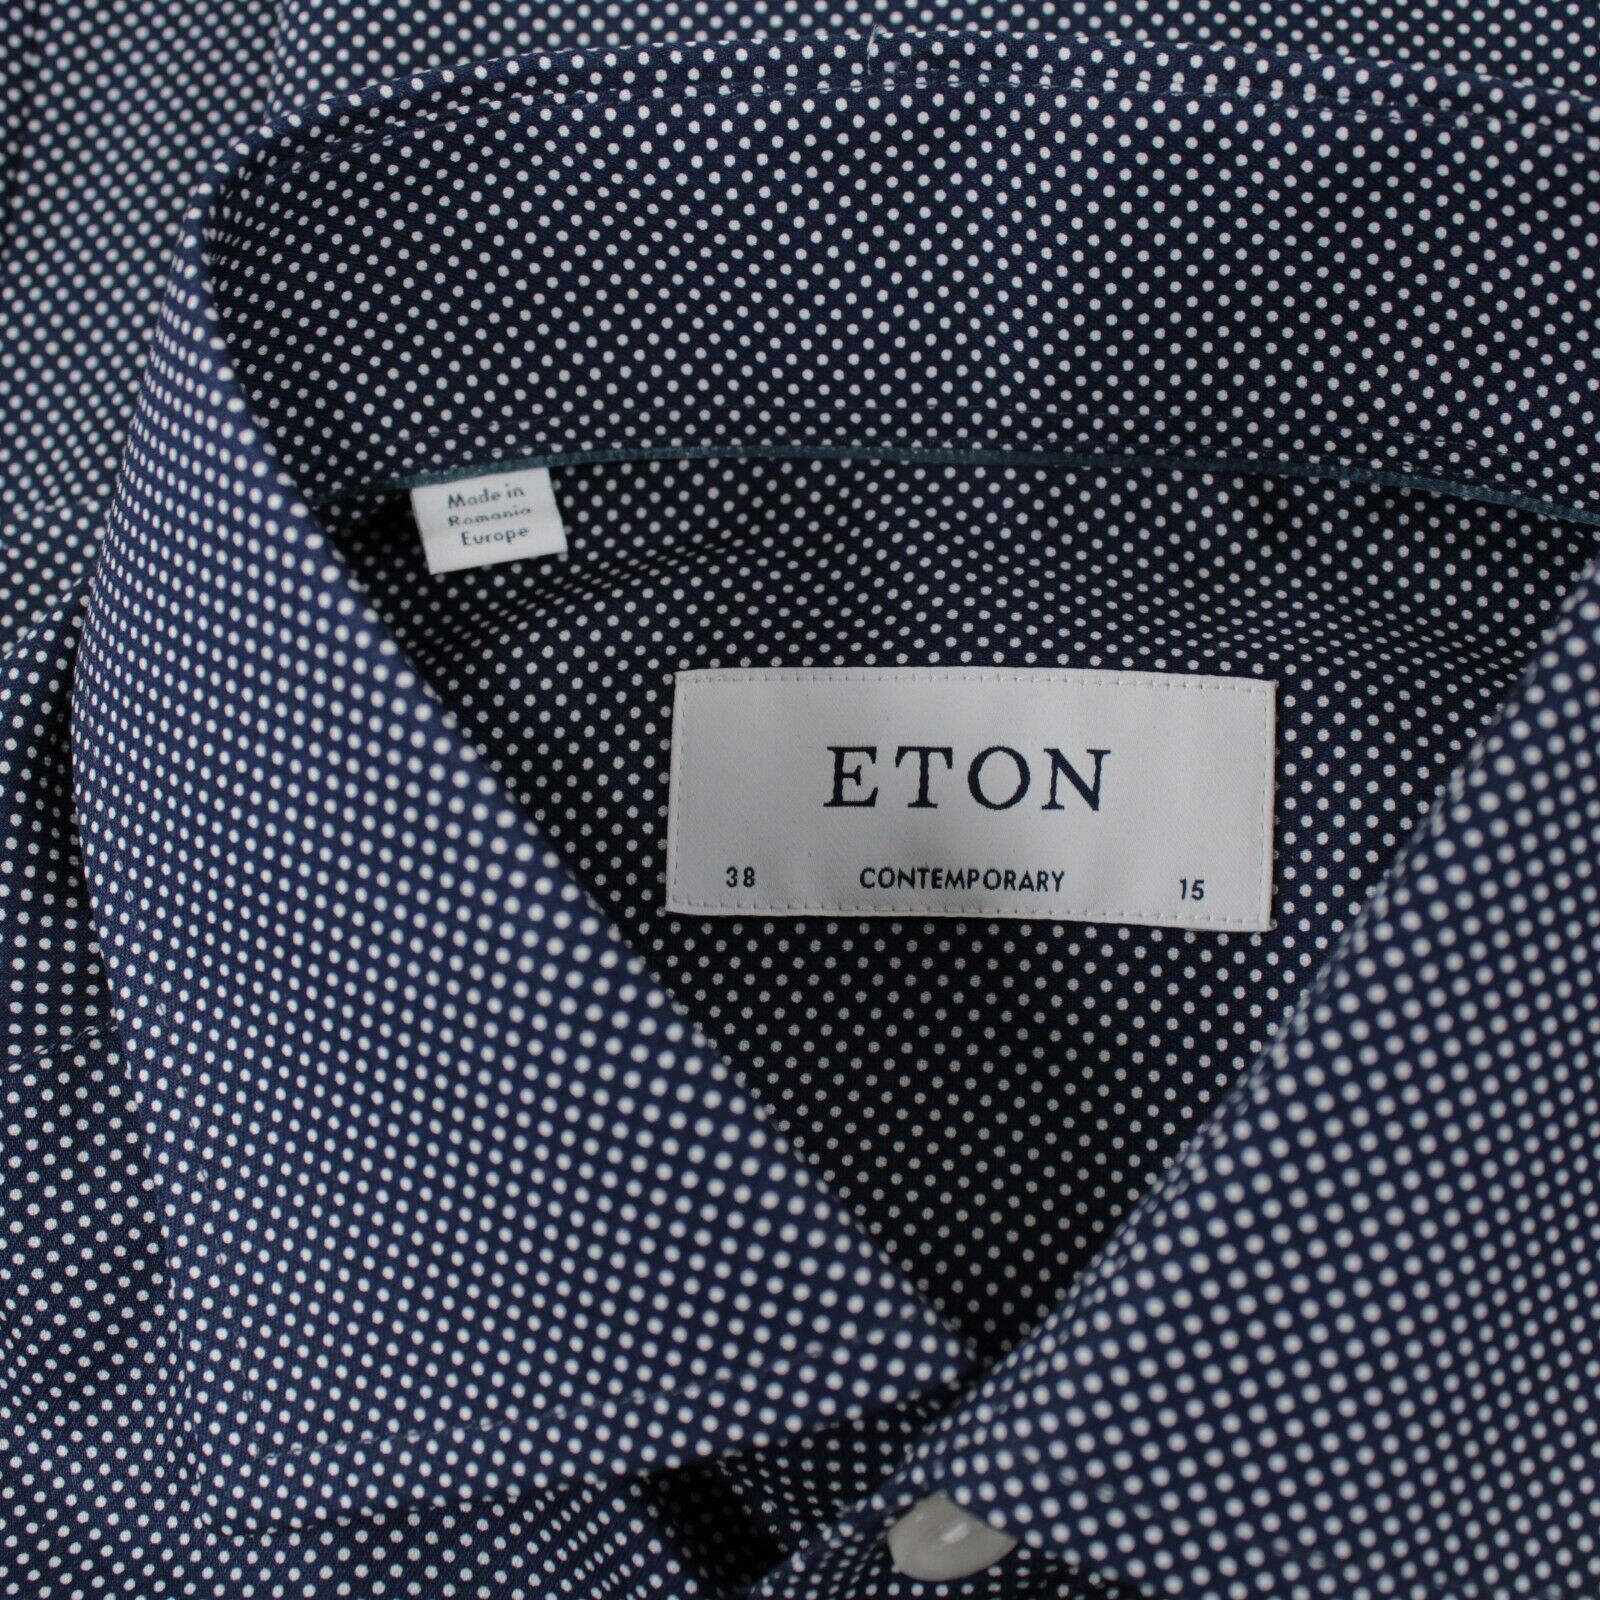 Eton NWT Dress Shirt Size 15 38 Contemporary In Dark Blue W/ White Polka Dot